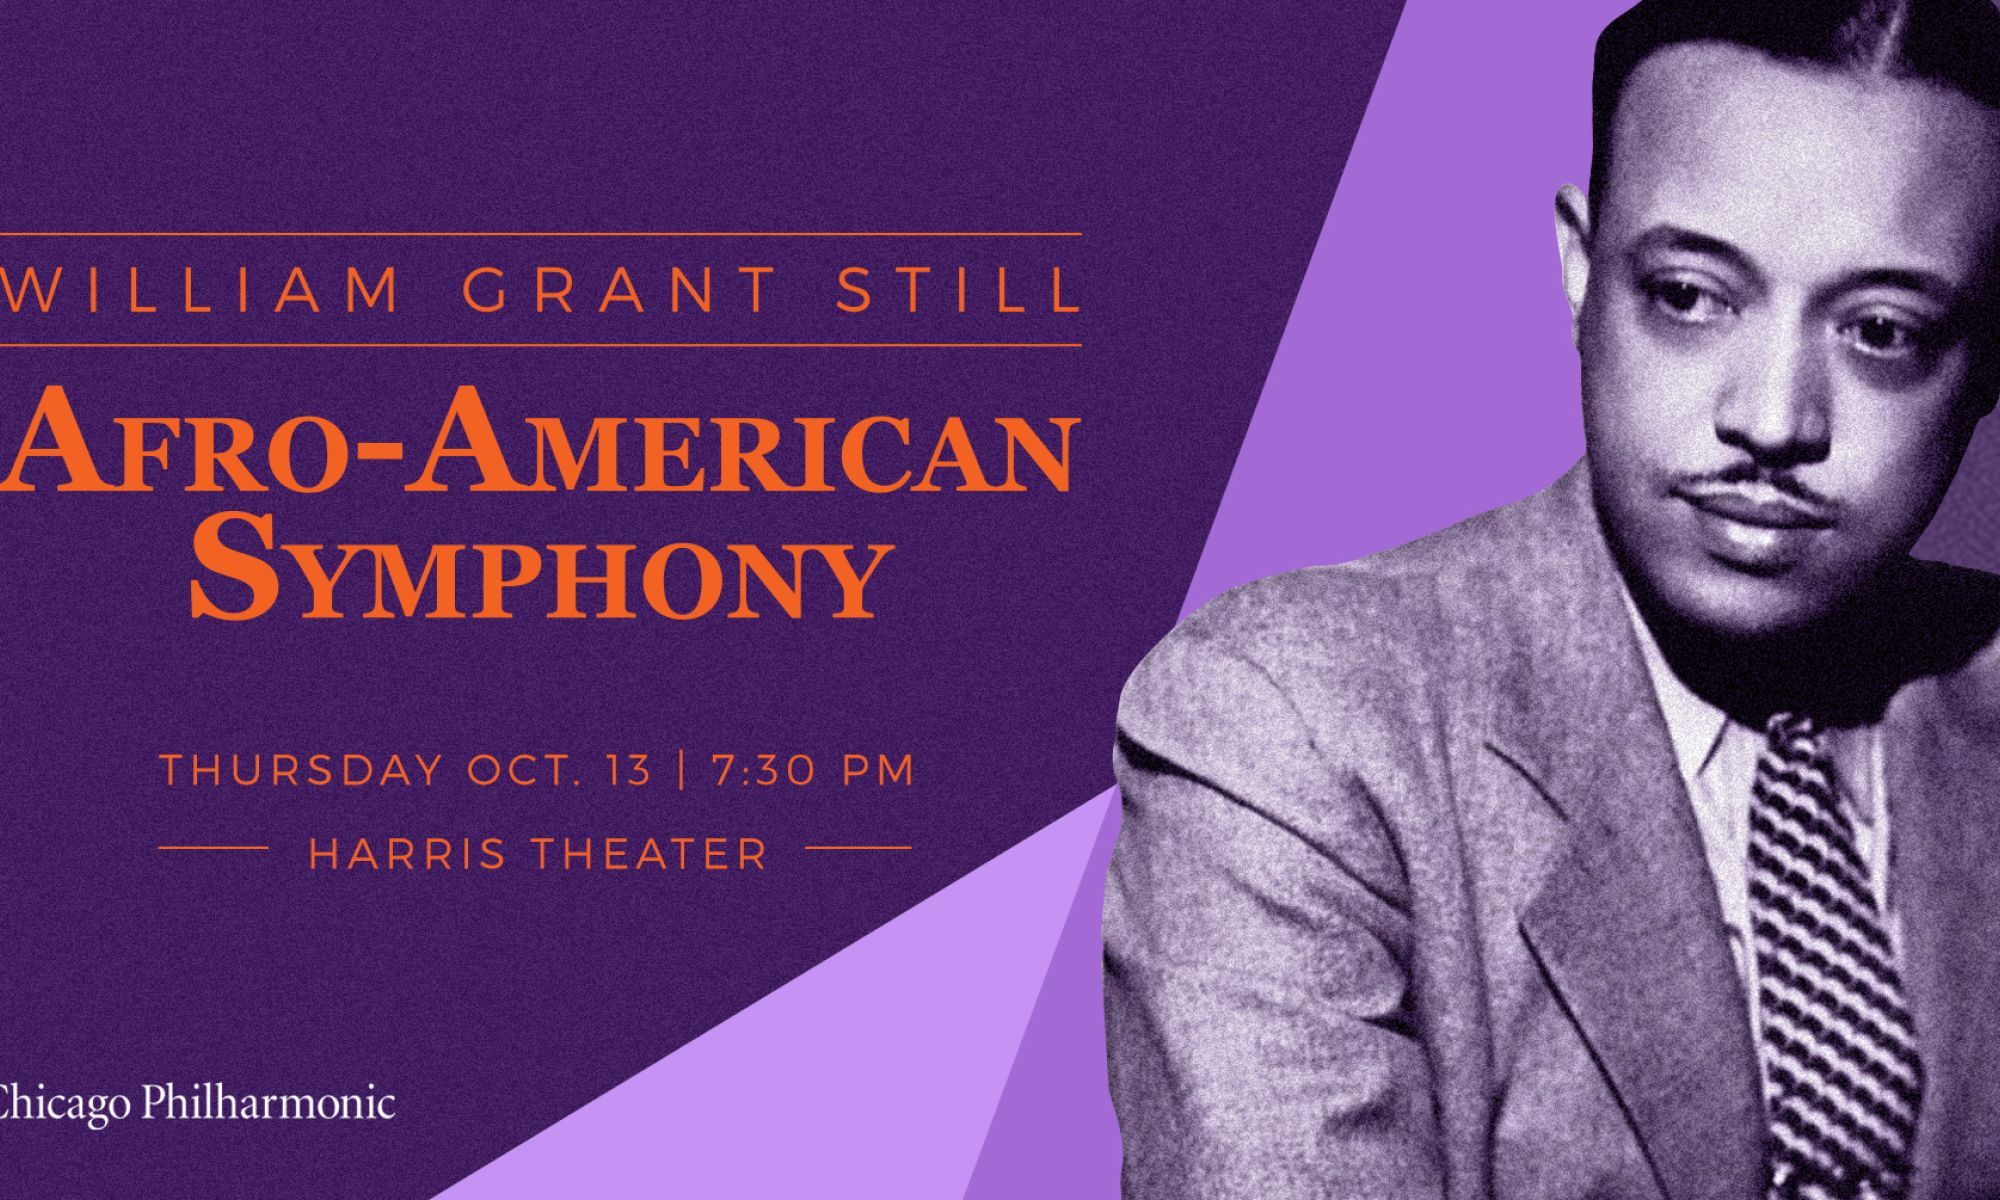 William Grant Still Afro-American Symphony